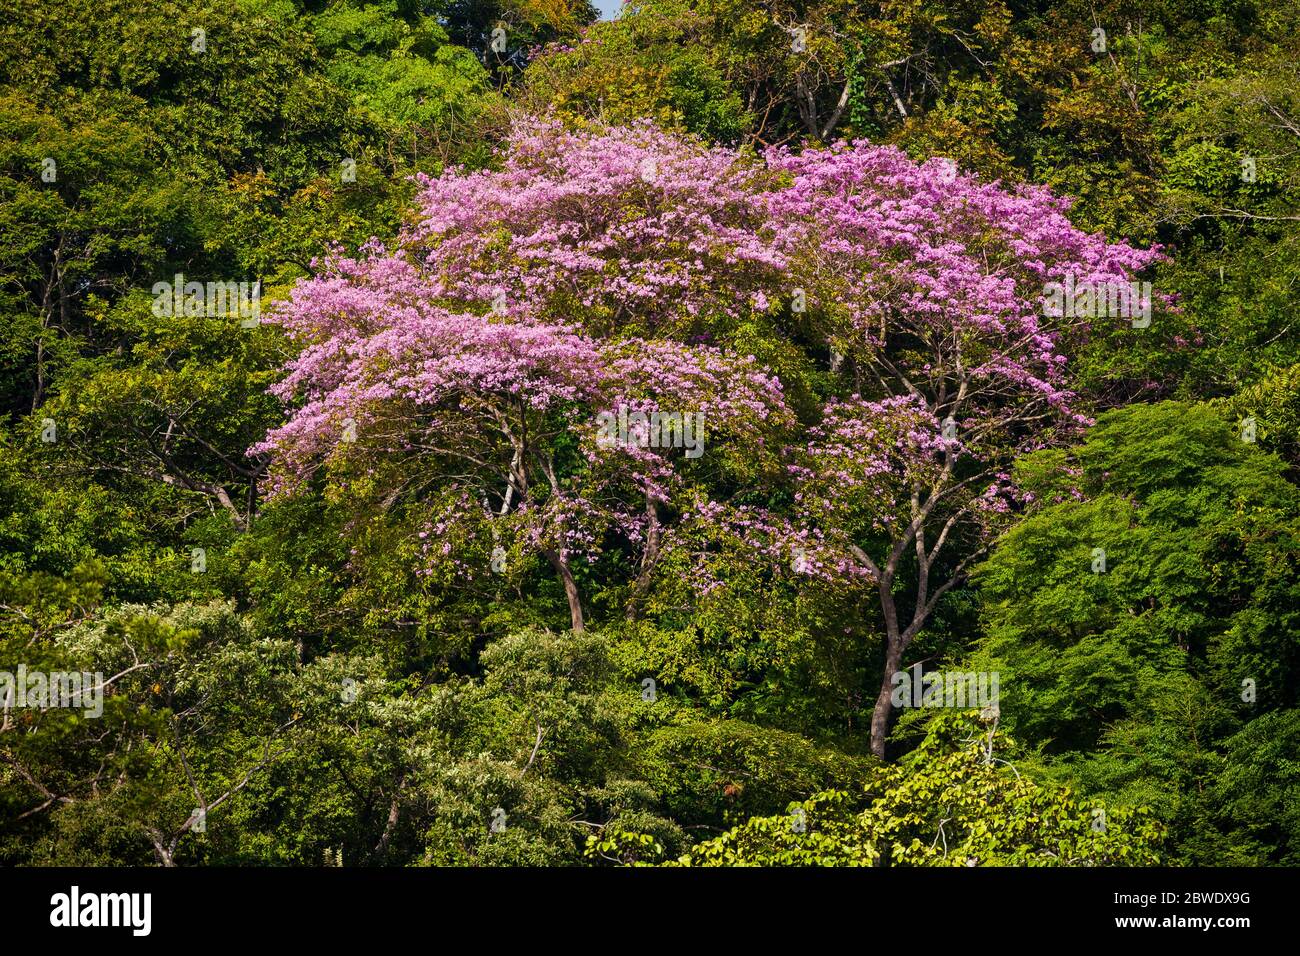 Flowering rosy trumpet tree, Tabebuia rosea, at Punta Chame, Pacific coast, Panama province, Republic of Panama. Stock Photo